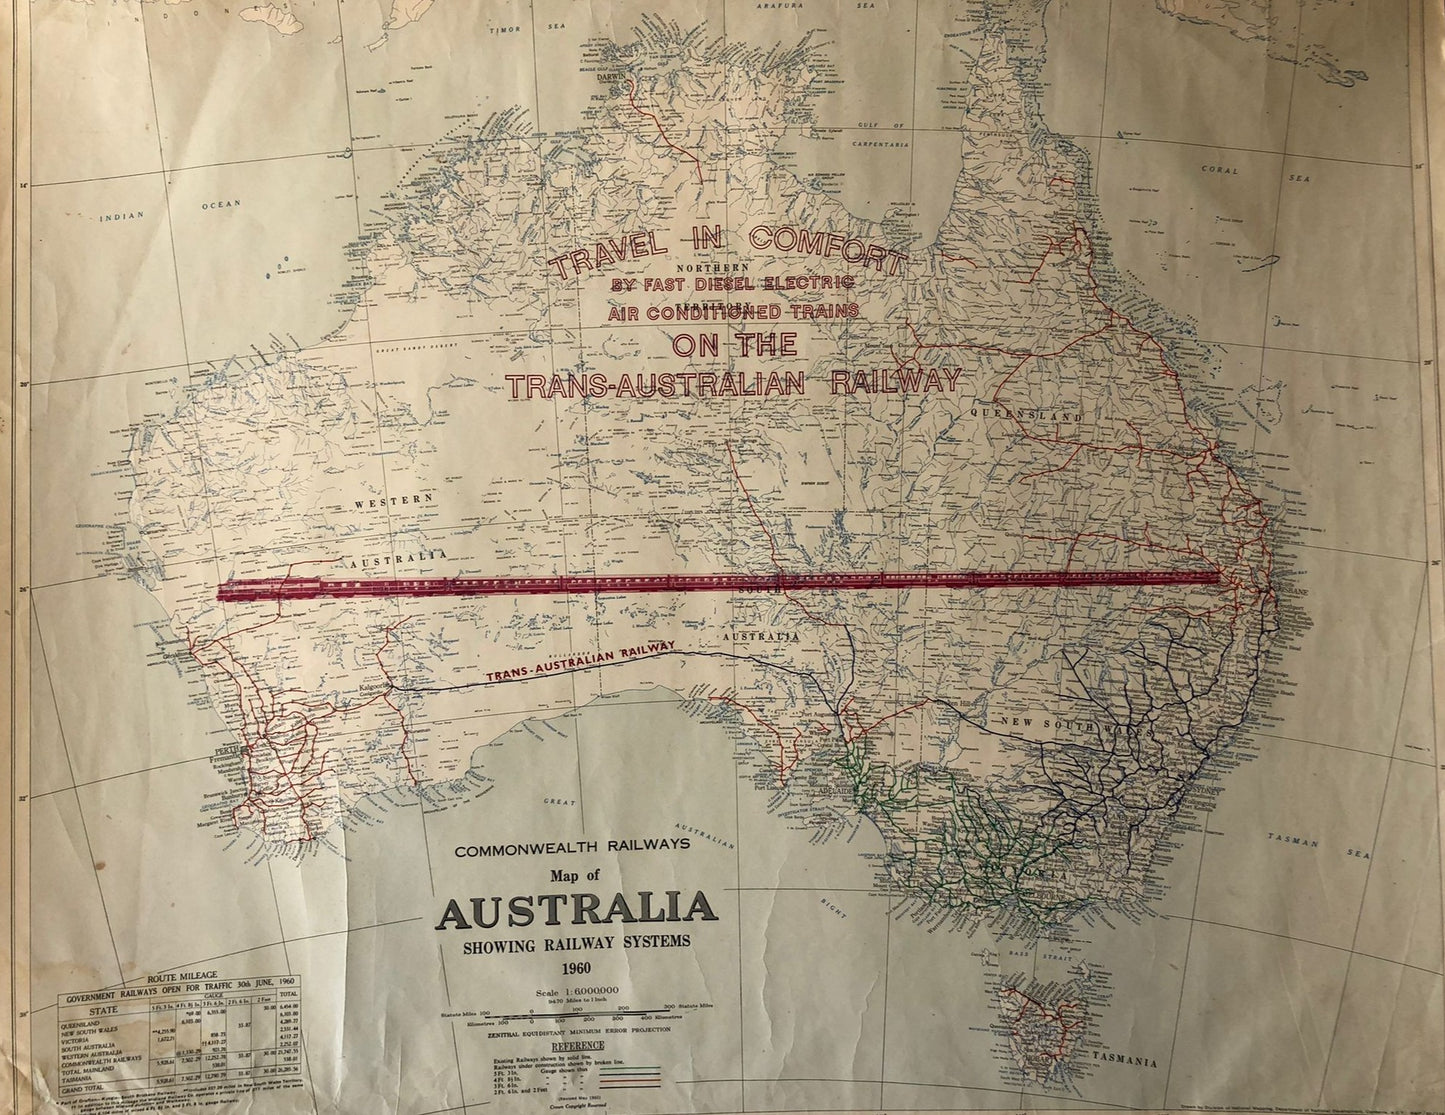 Trans-Australian Railway "Travel In Comfort" Map